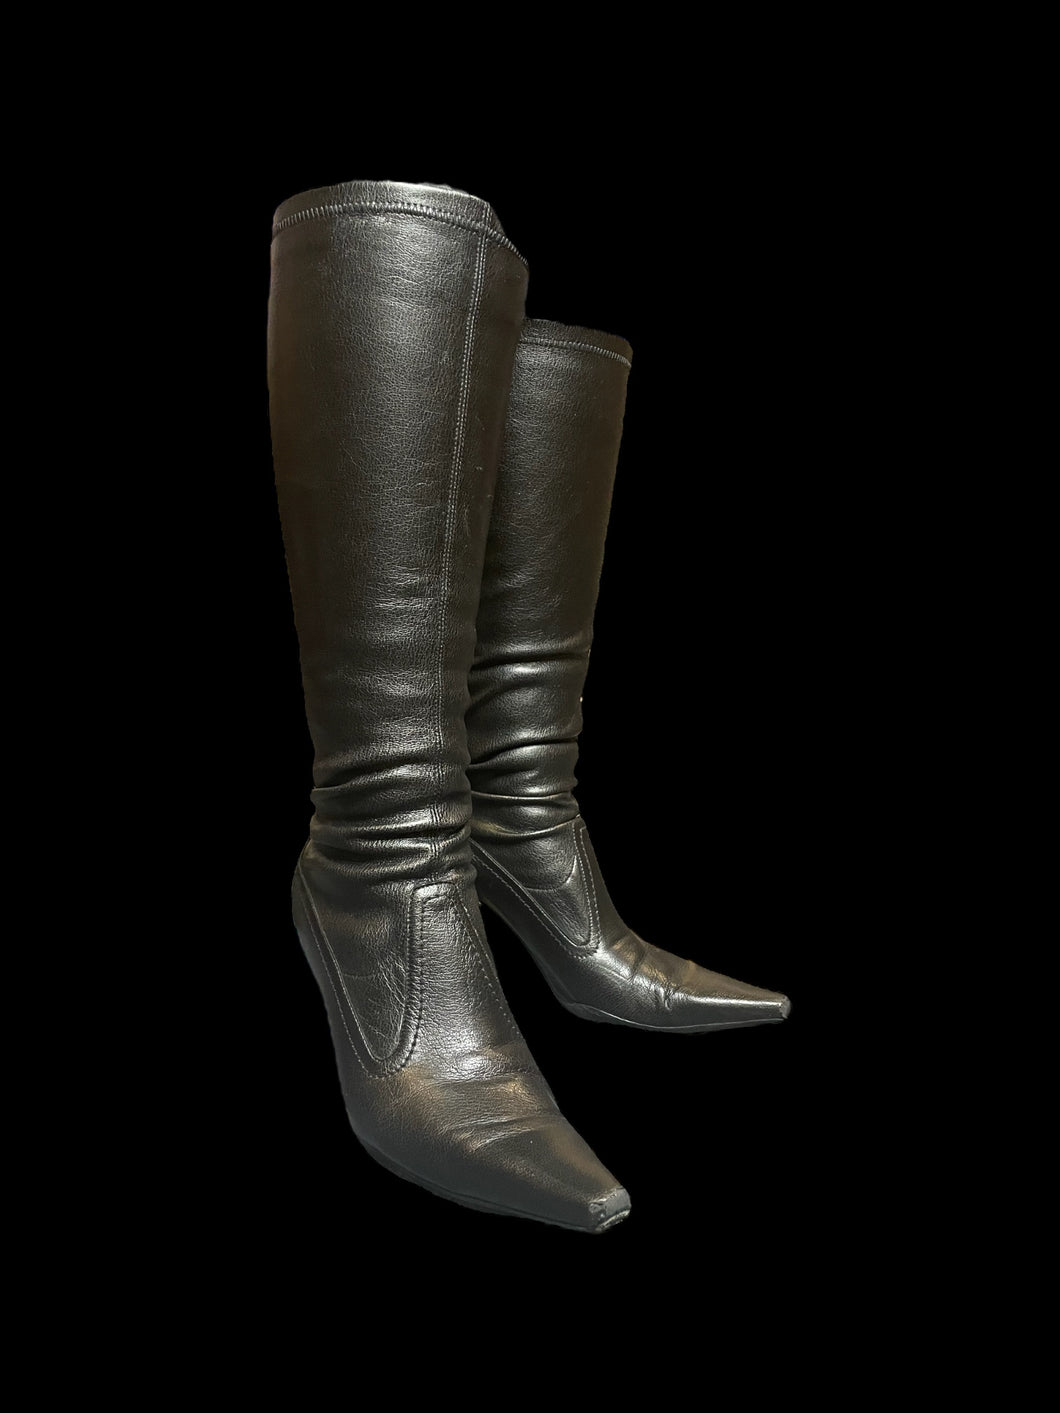 8.5M Black pointed toe knee high boots w/ kitten heel, & paneled design